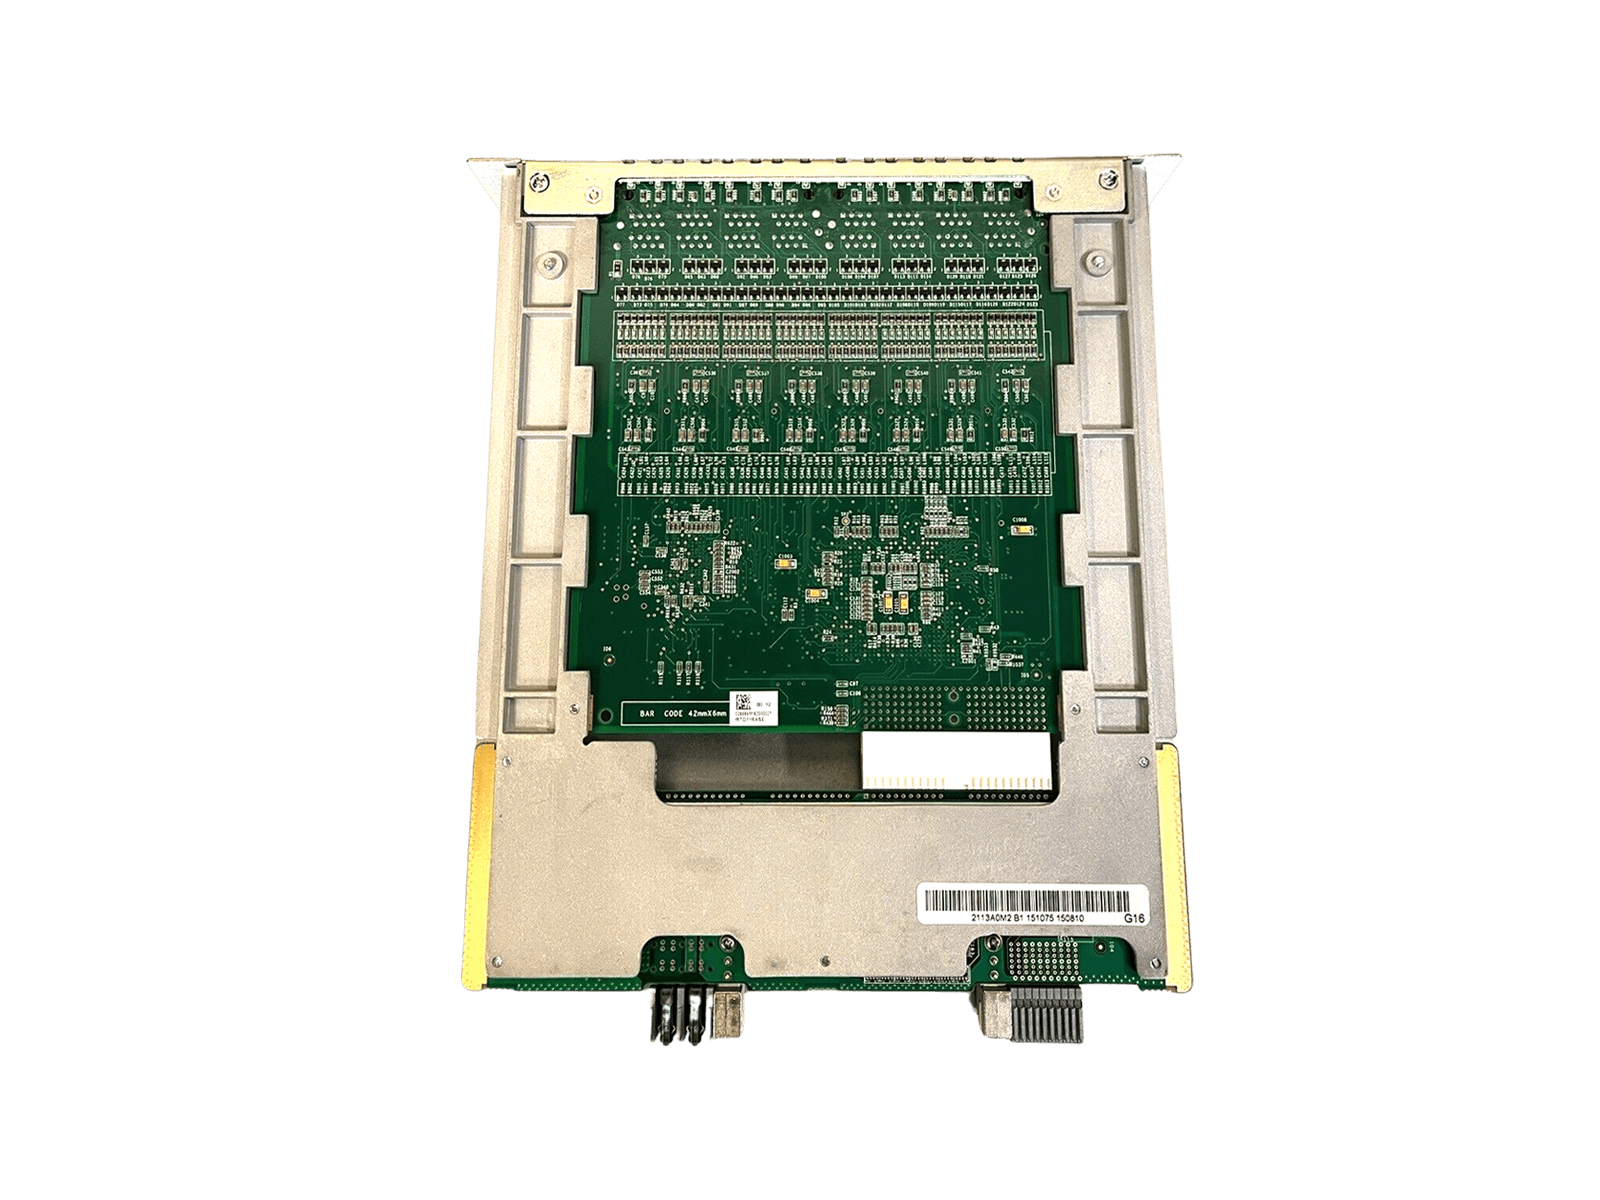 HPE JG445A FlexNetwor 16 Port Enhanced Async Serial HMIM Module JG445-61001 Enh.